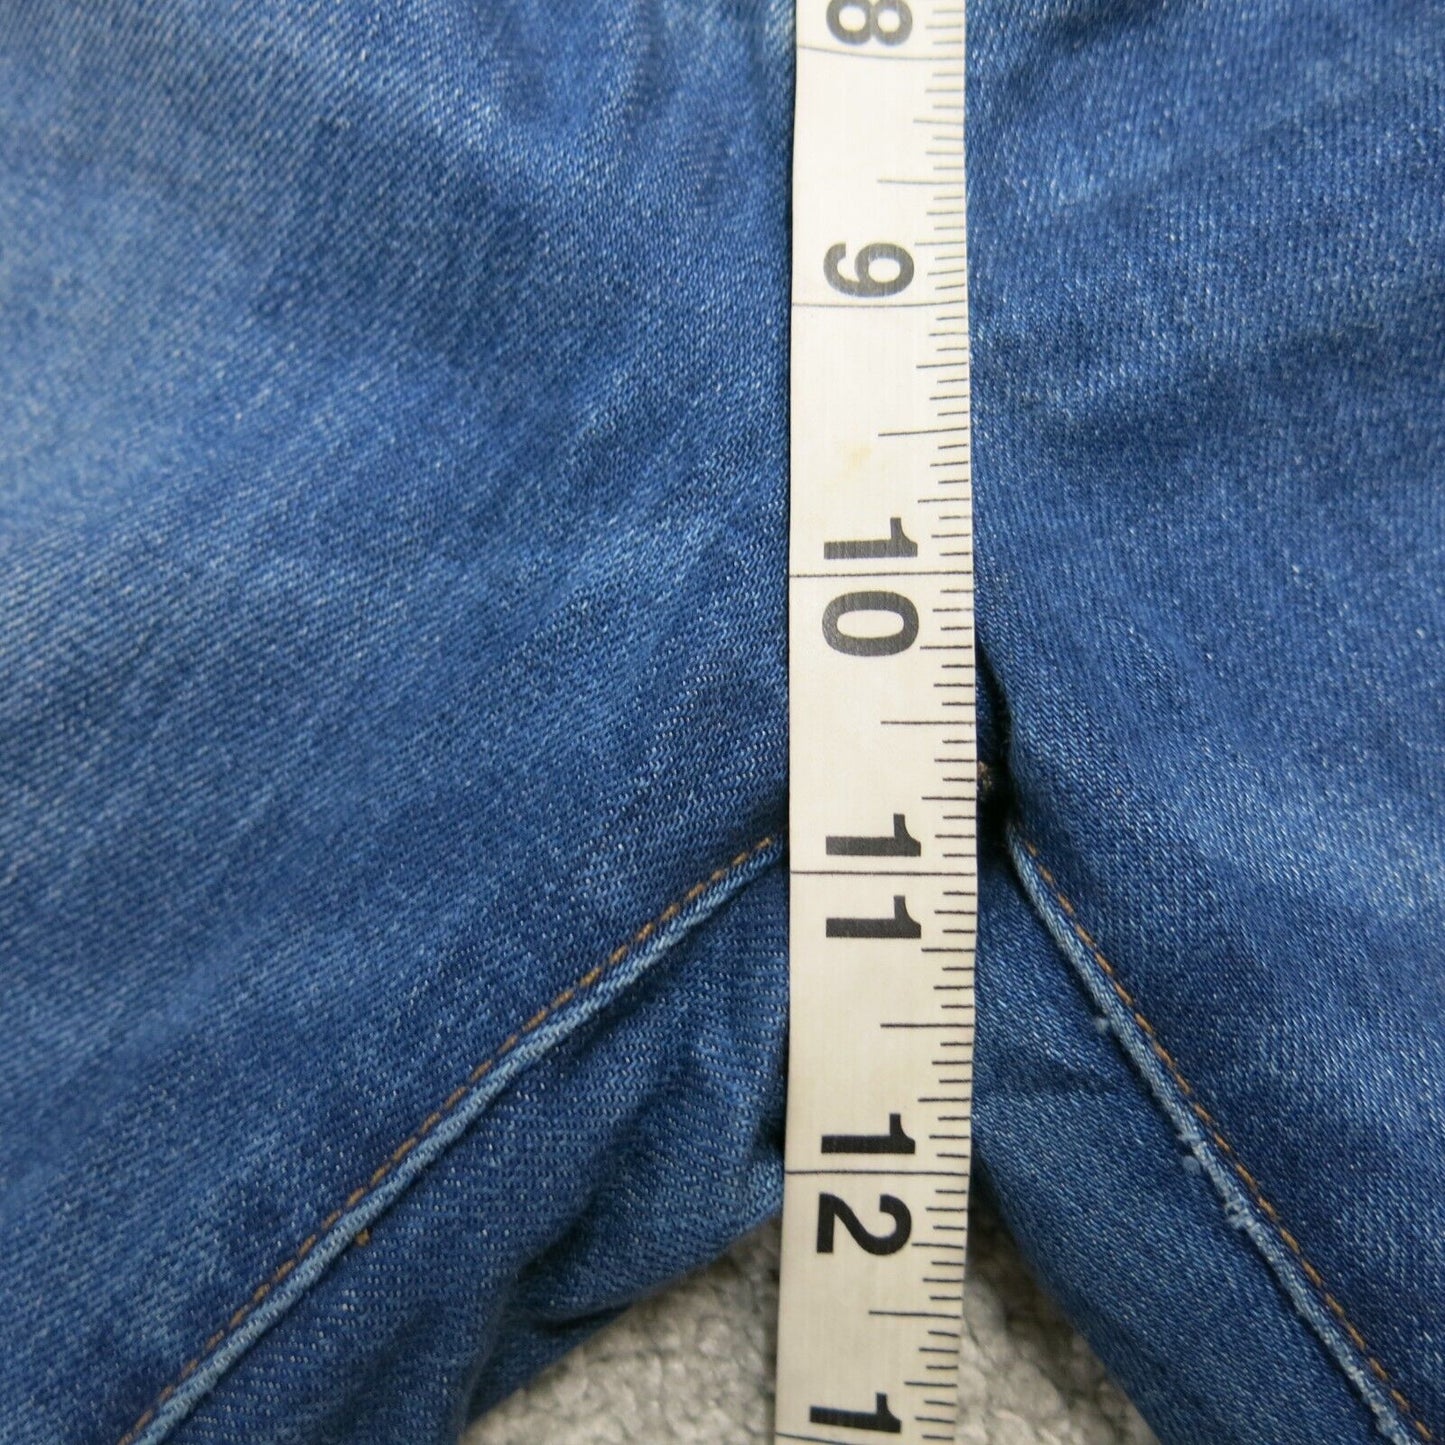 Madewell Womens 10" High Rise Skinny Crop Jeans Denim Stretch Pocket Blue SZ 28